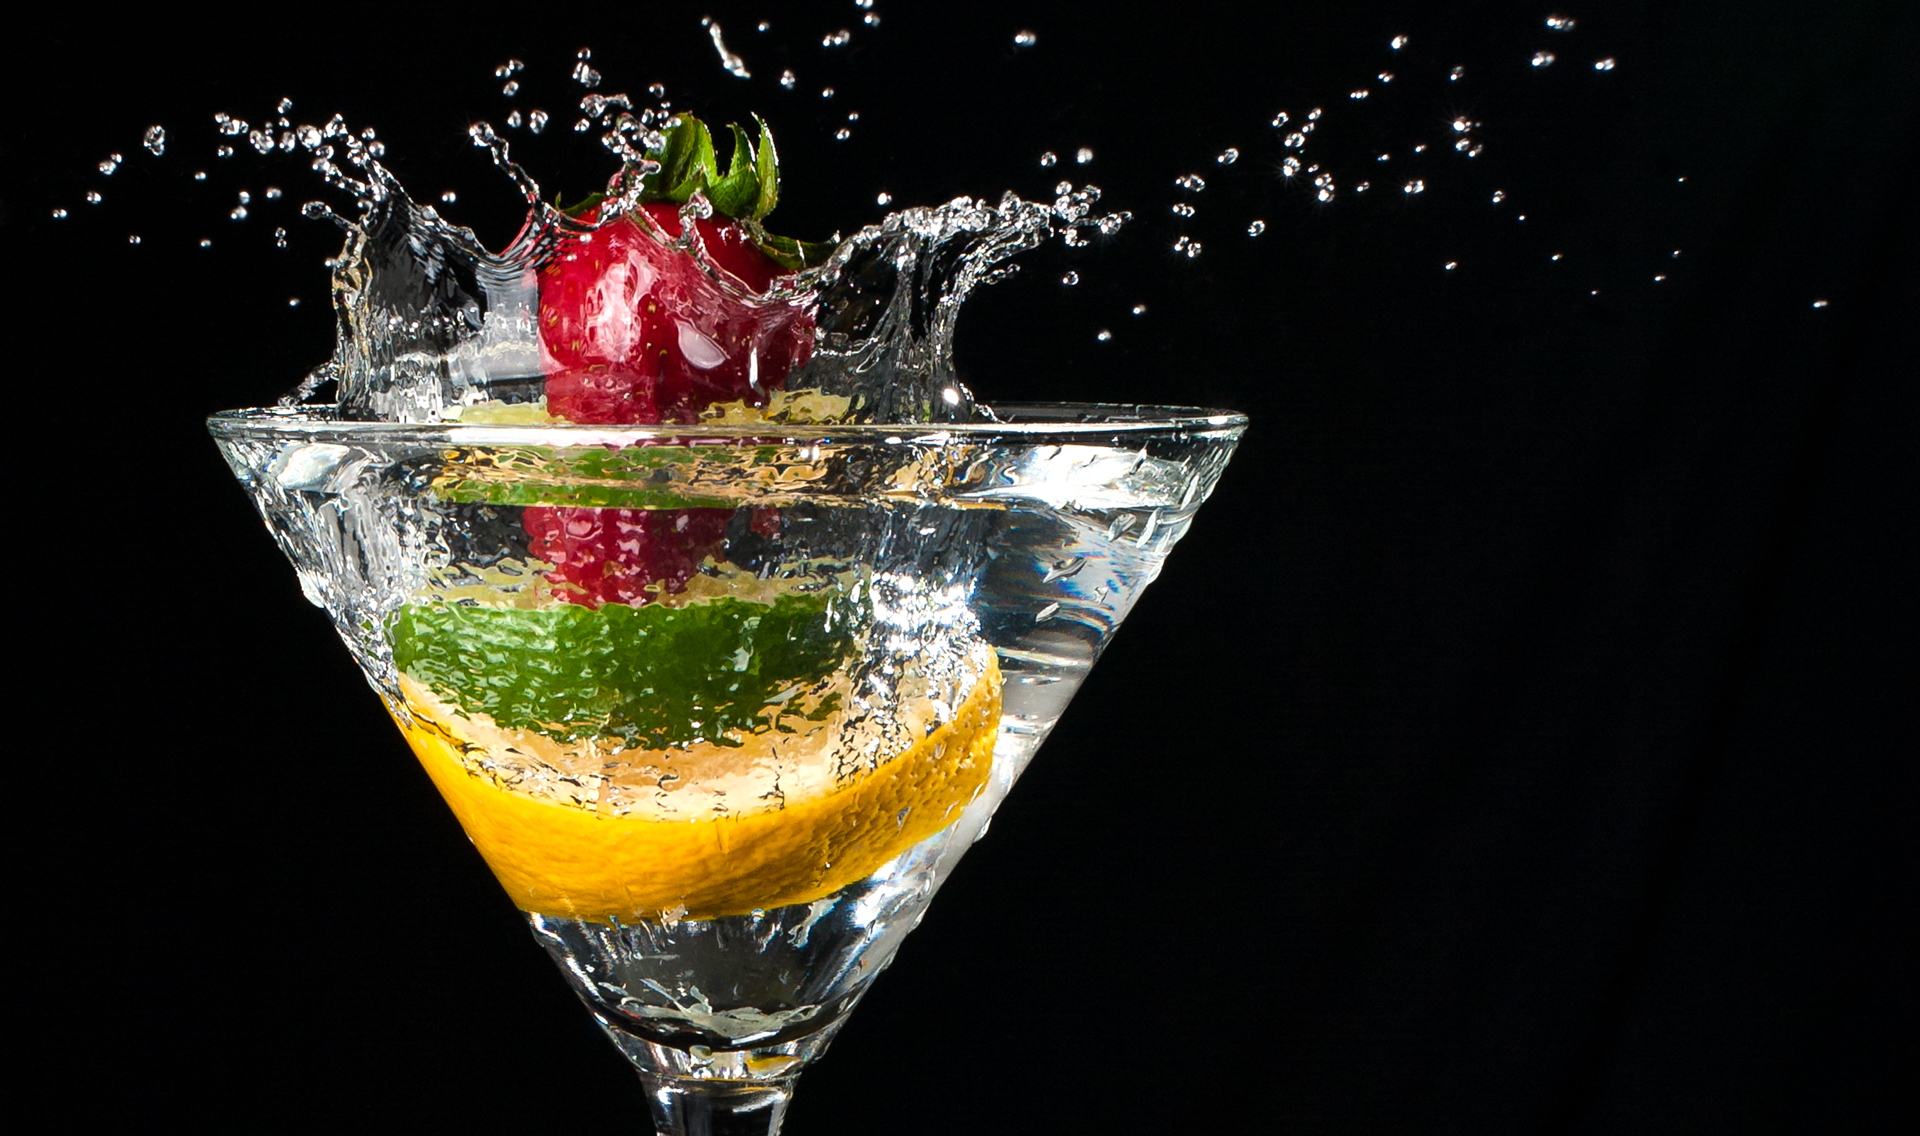 Fruit splashing into a martini glass